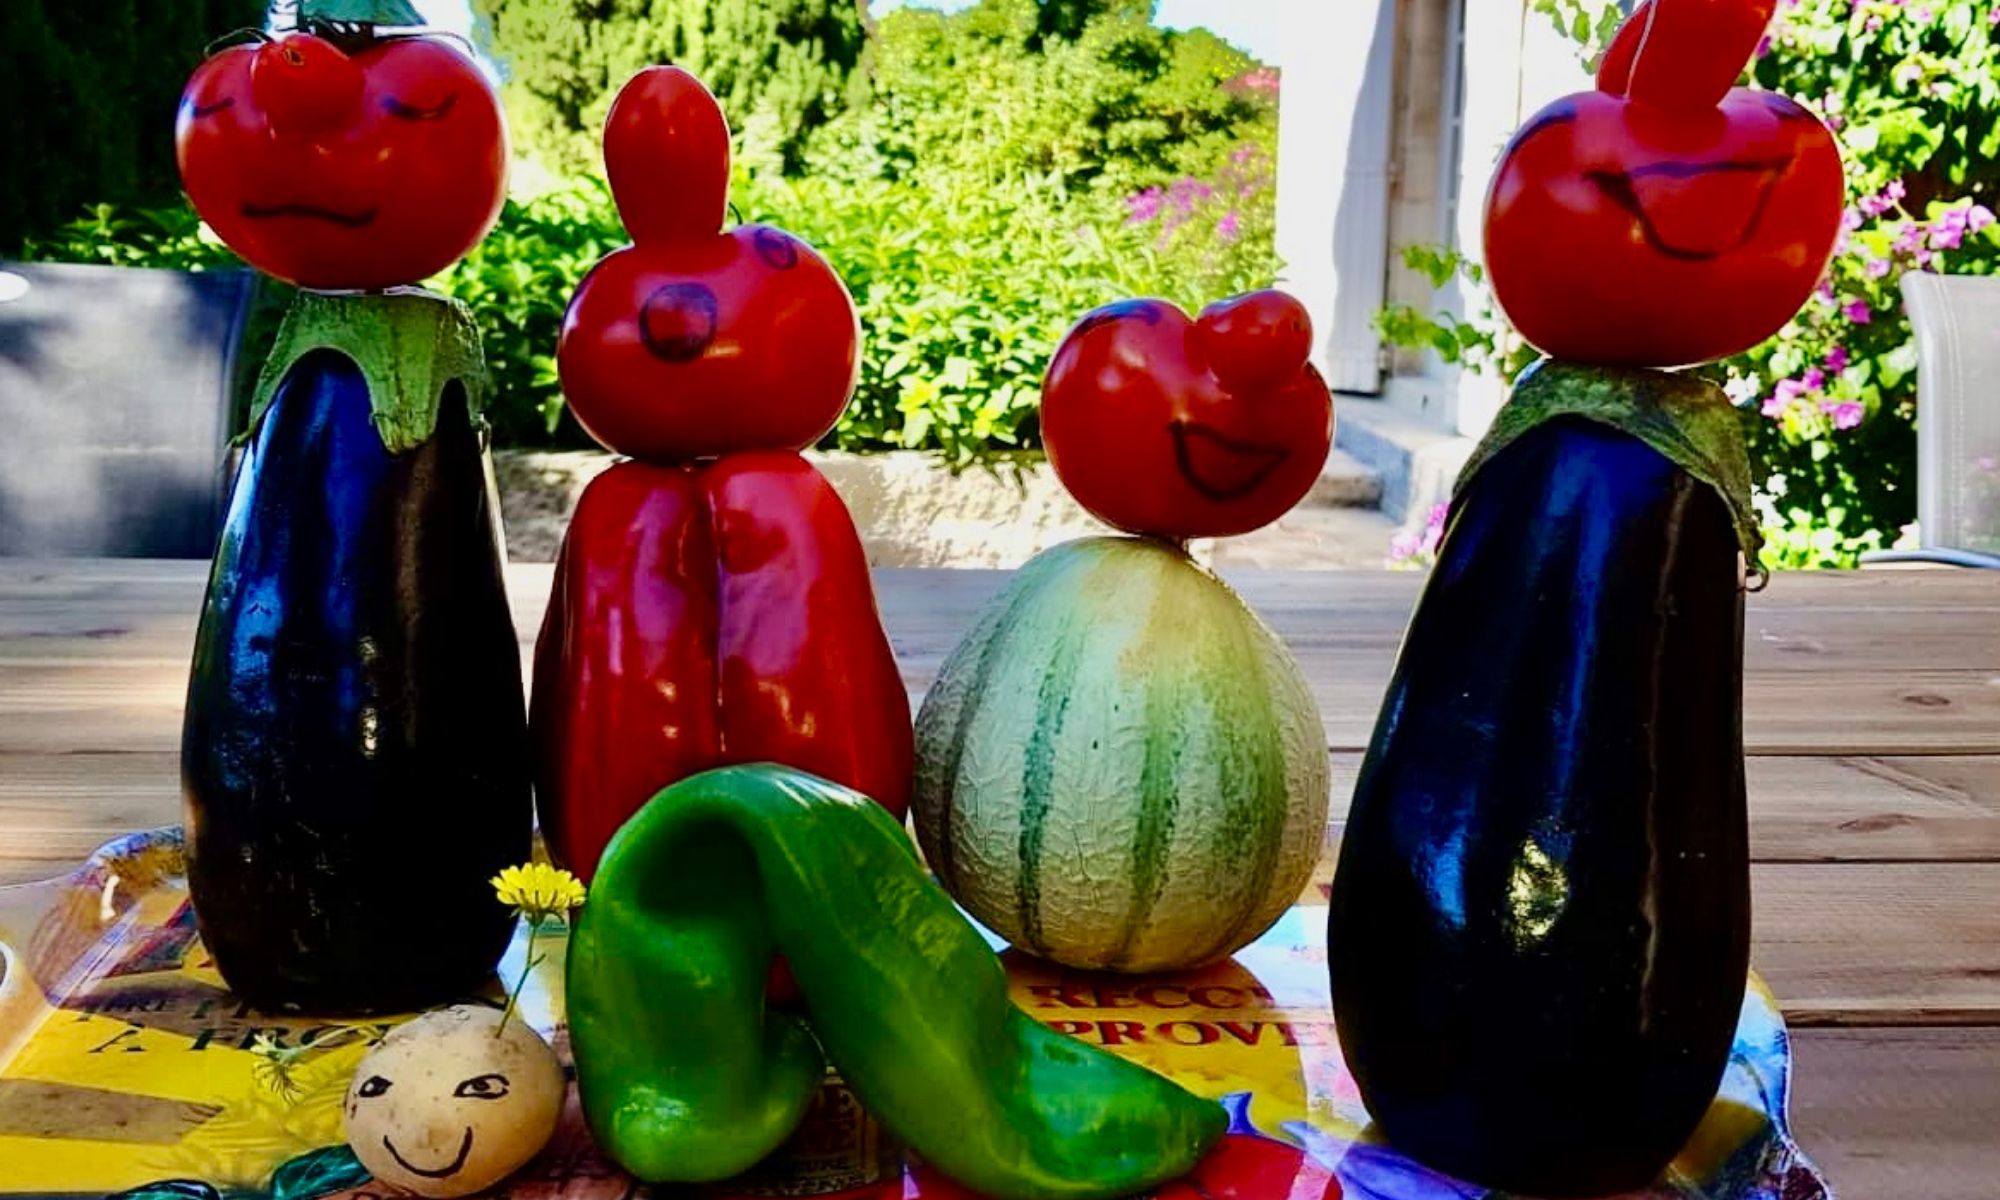 Sculptures de légumes moches